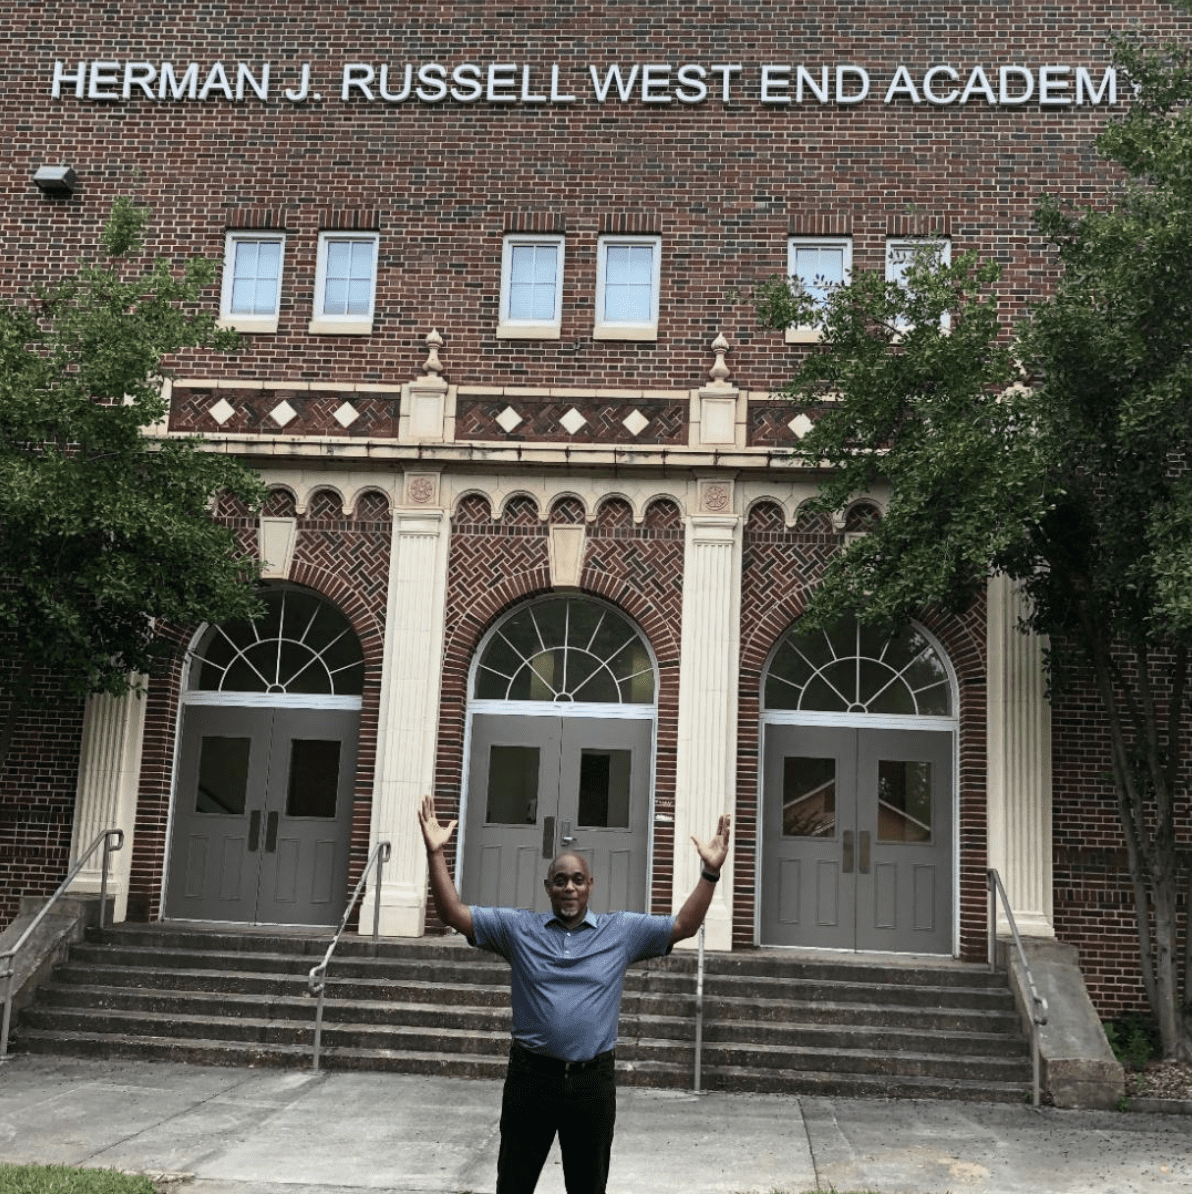 School Renamed the Herman J. Russell West End Academy